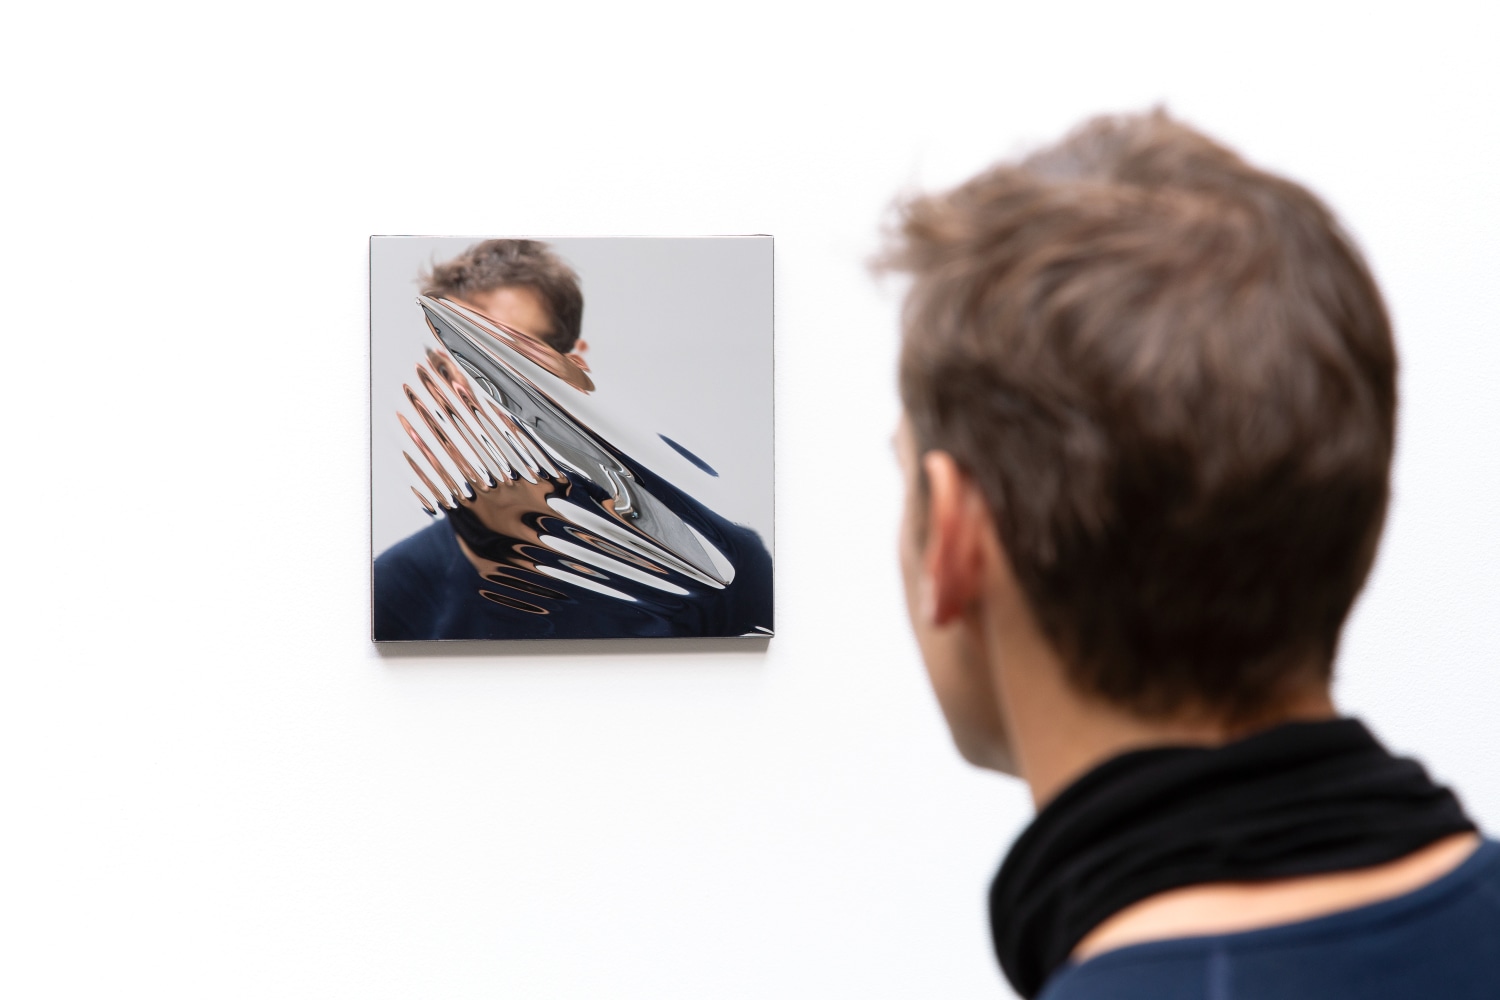 Jeppe Hein

My Mirror #12

2020

Mirror foil on aluminum frame

11 7/8 x 11 7/8 inches (30 x 30 cm)

Unique

JH 575

&amp;nbsp;

INQUIRE